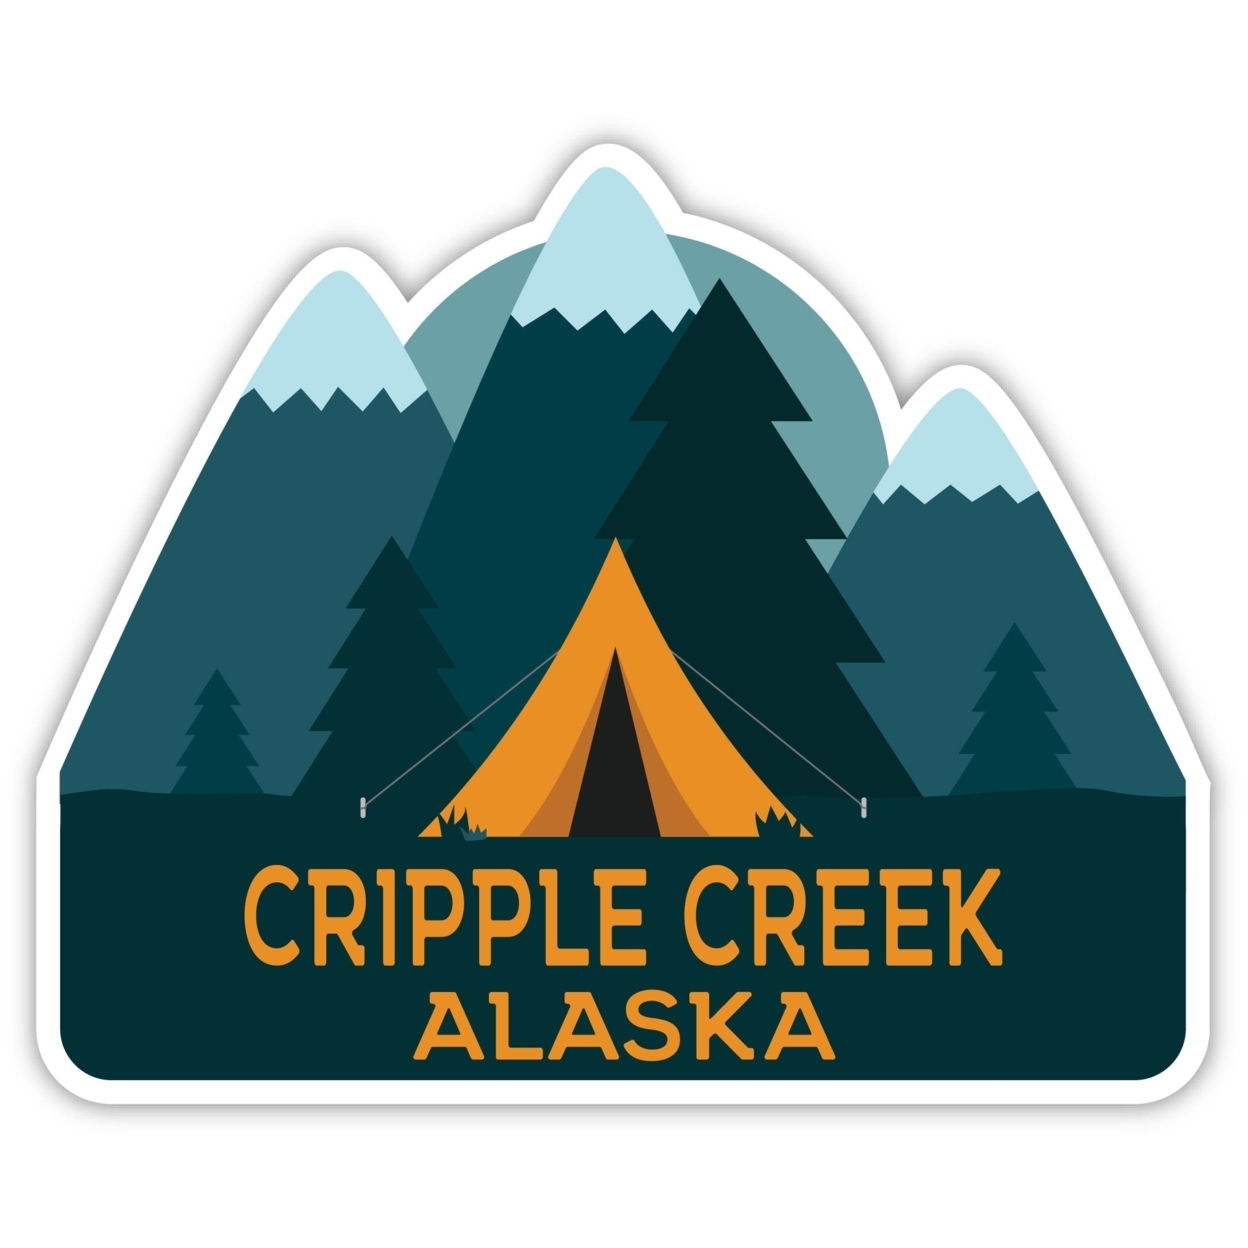 Cripple Creek Alaska Souvenir Decorative Stickers (Choose Theme And Size) - 4-Pack, 2-Inch, Tent